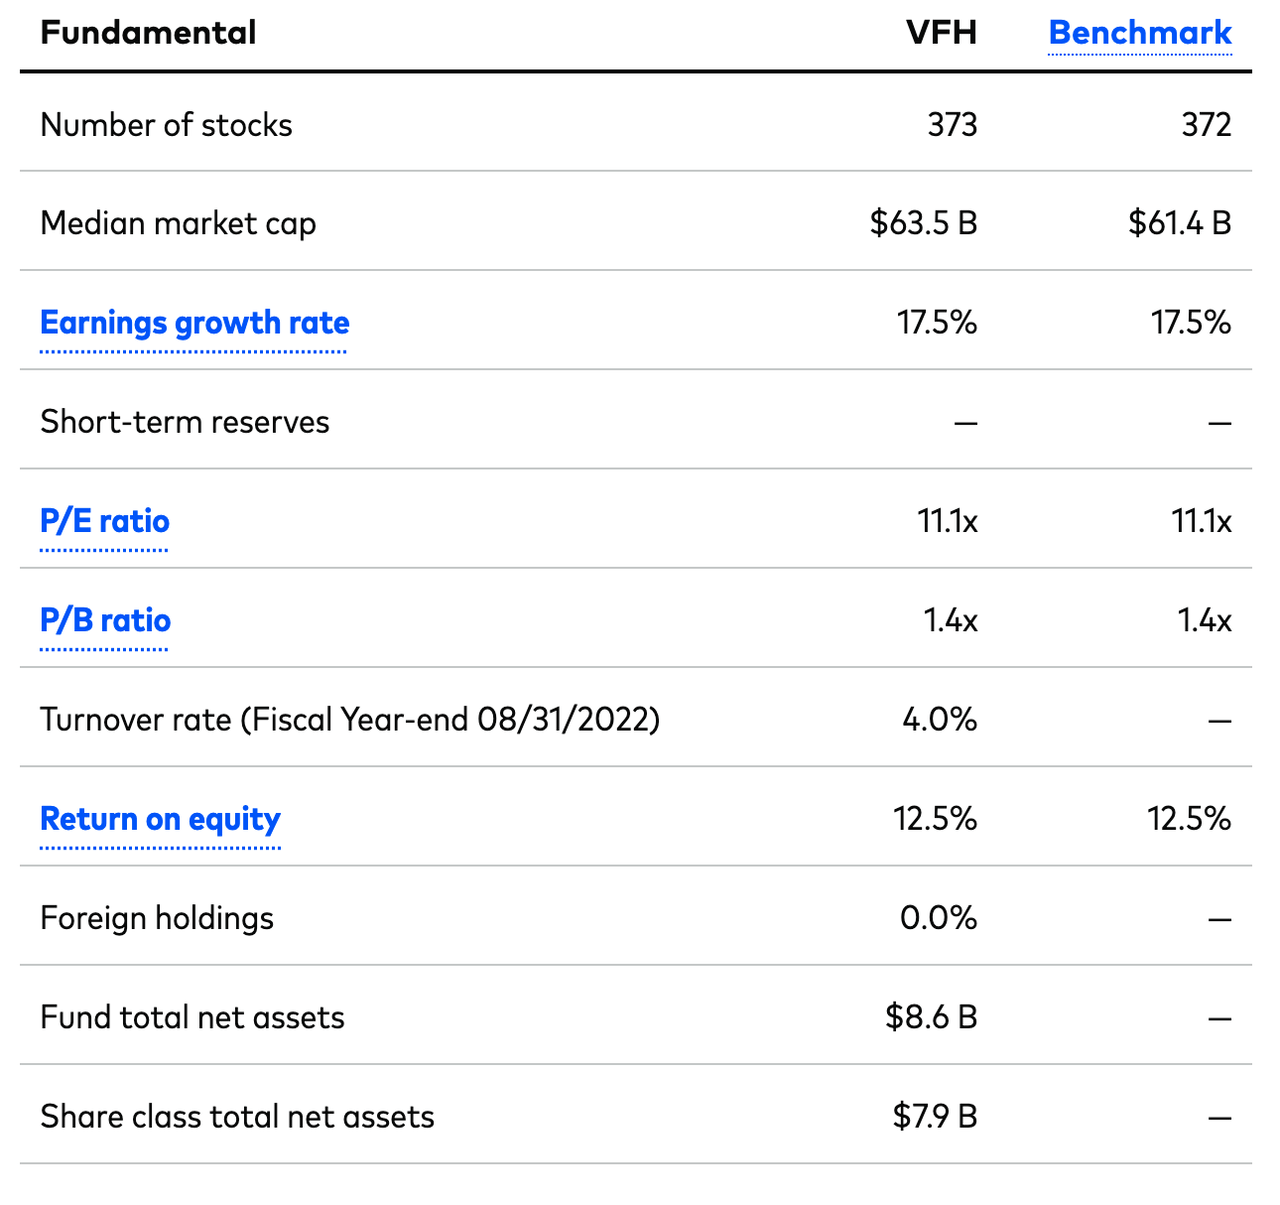 Valuation of the VFH portfolio